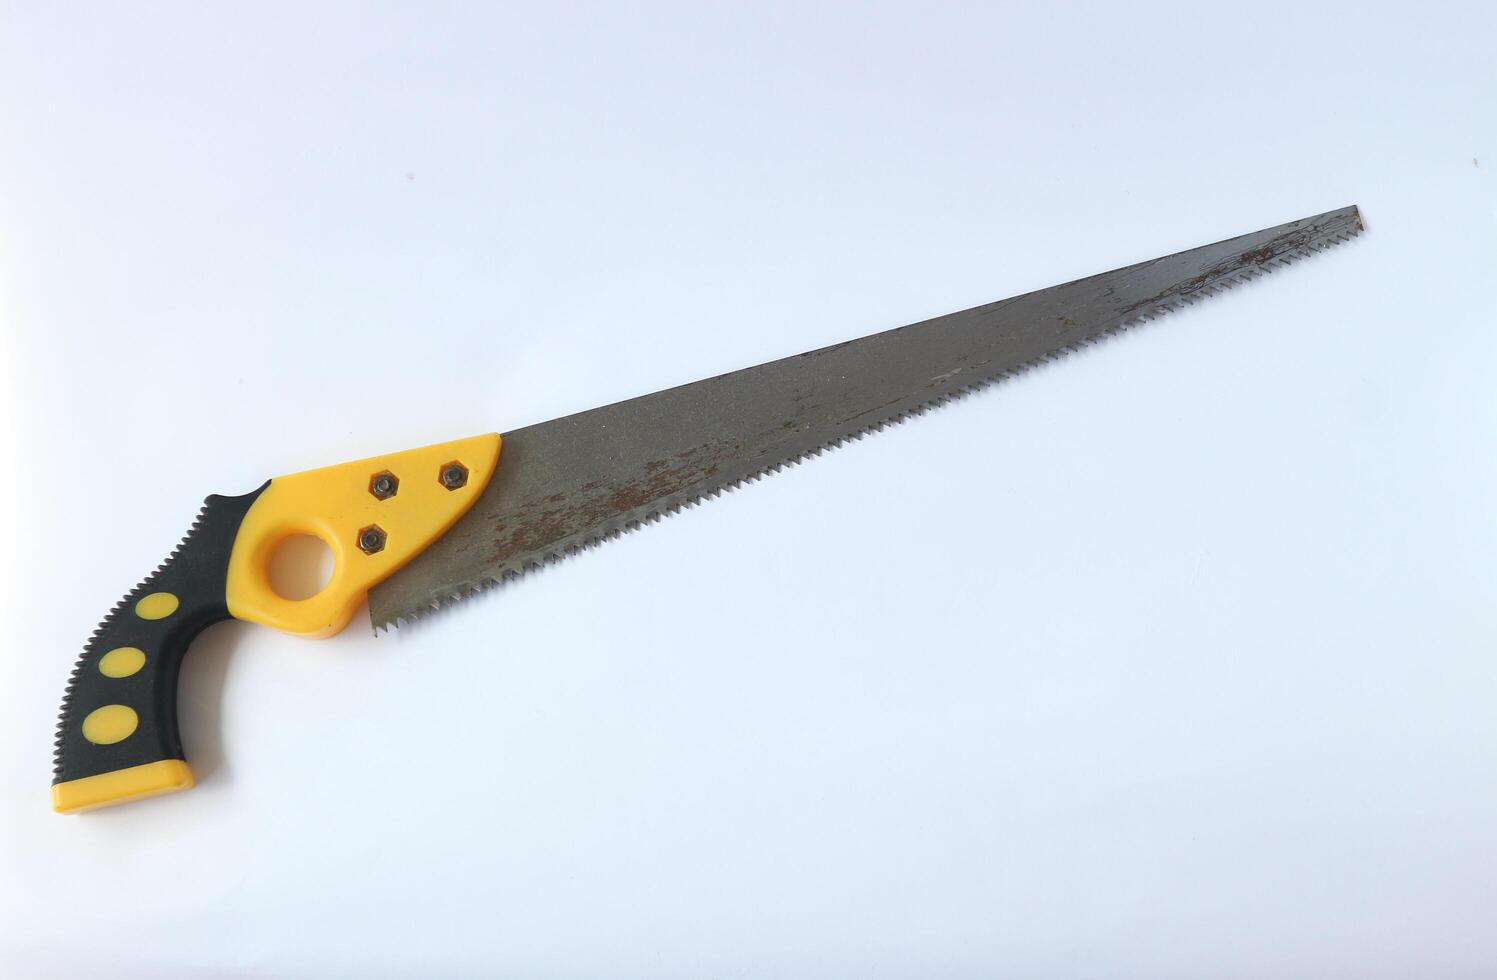 Hand saw with yellow plastic handle photo